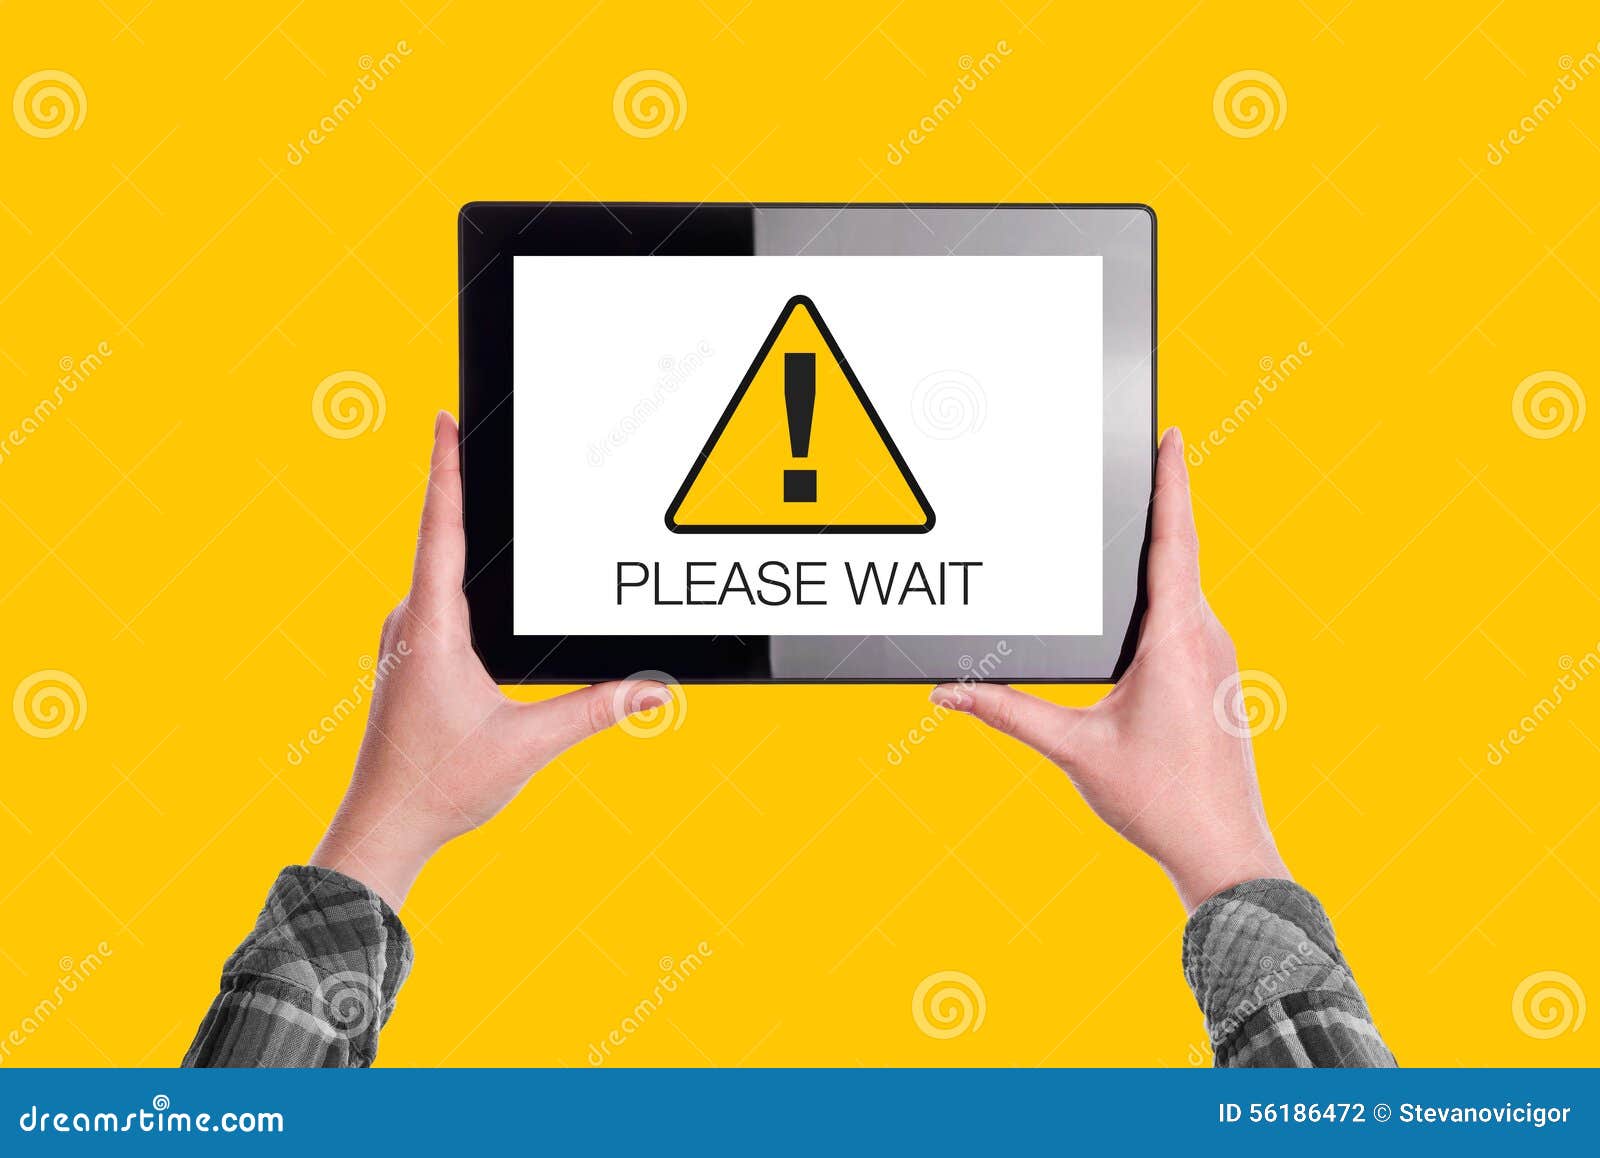 please wait message on digital tablet computer display